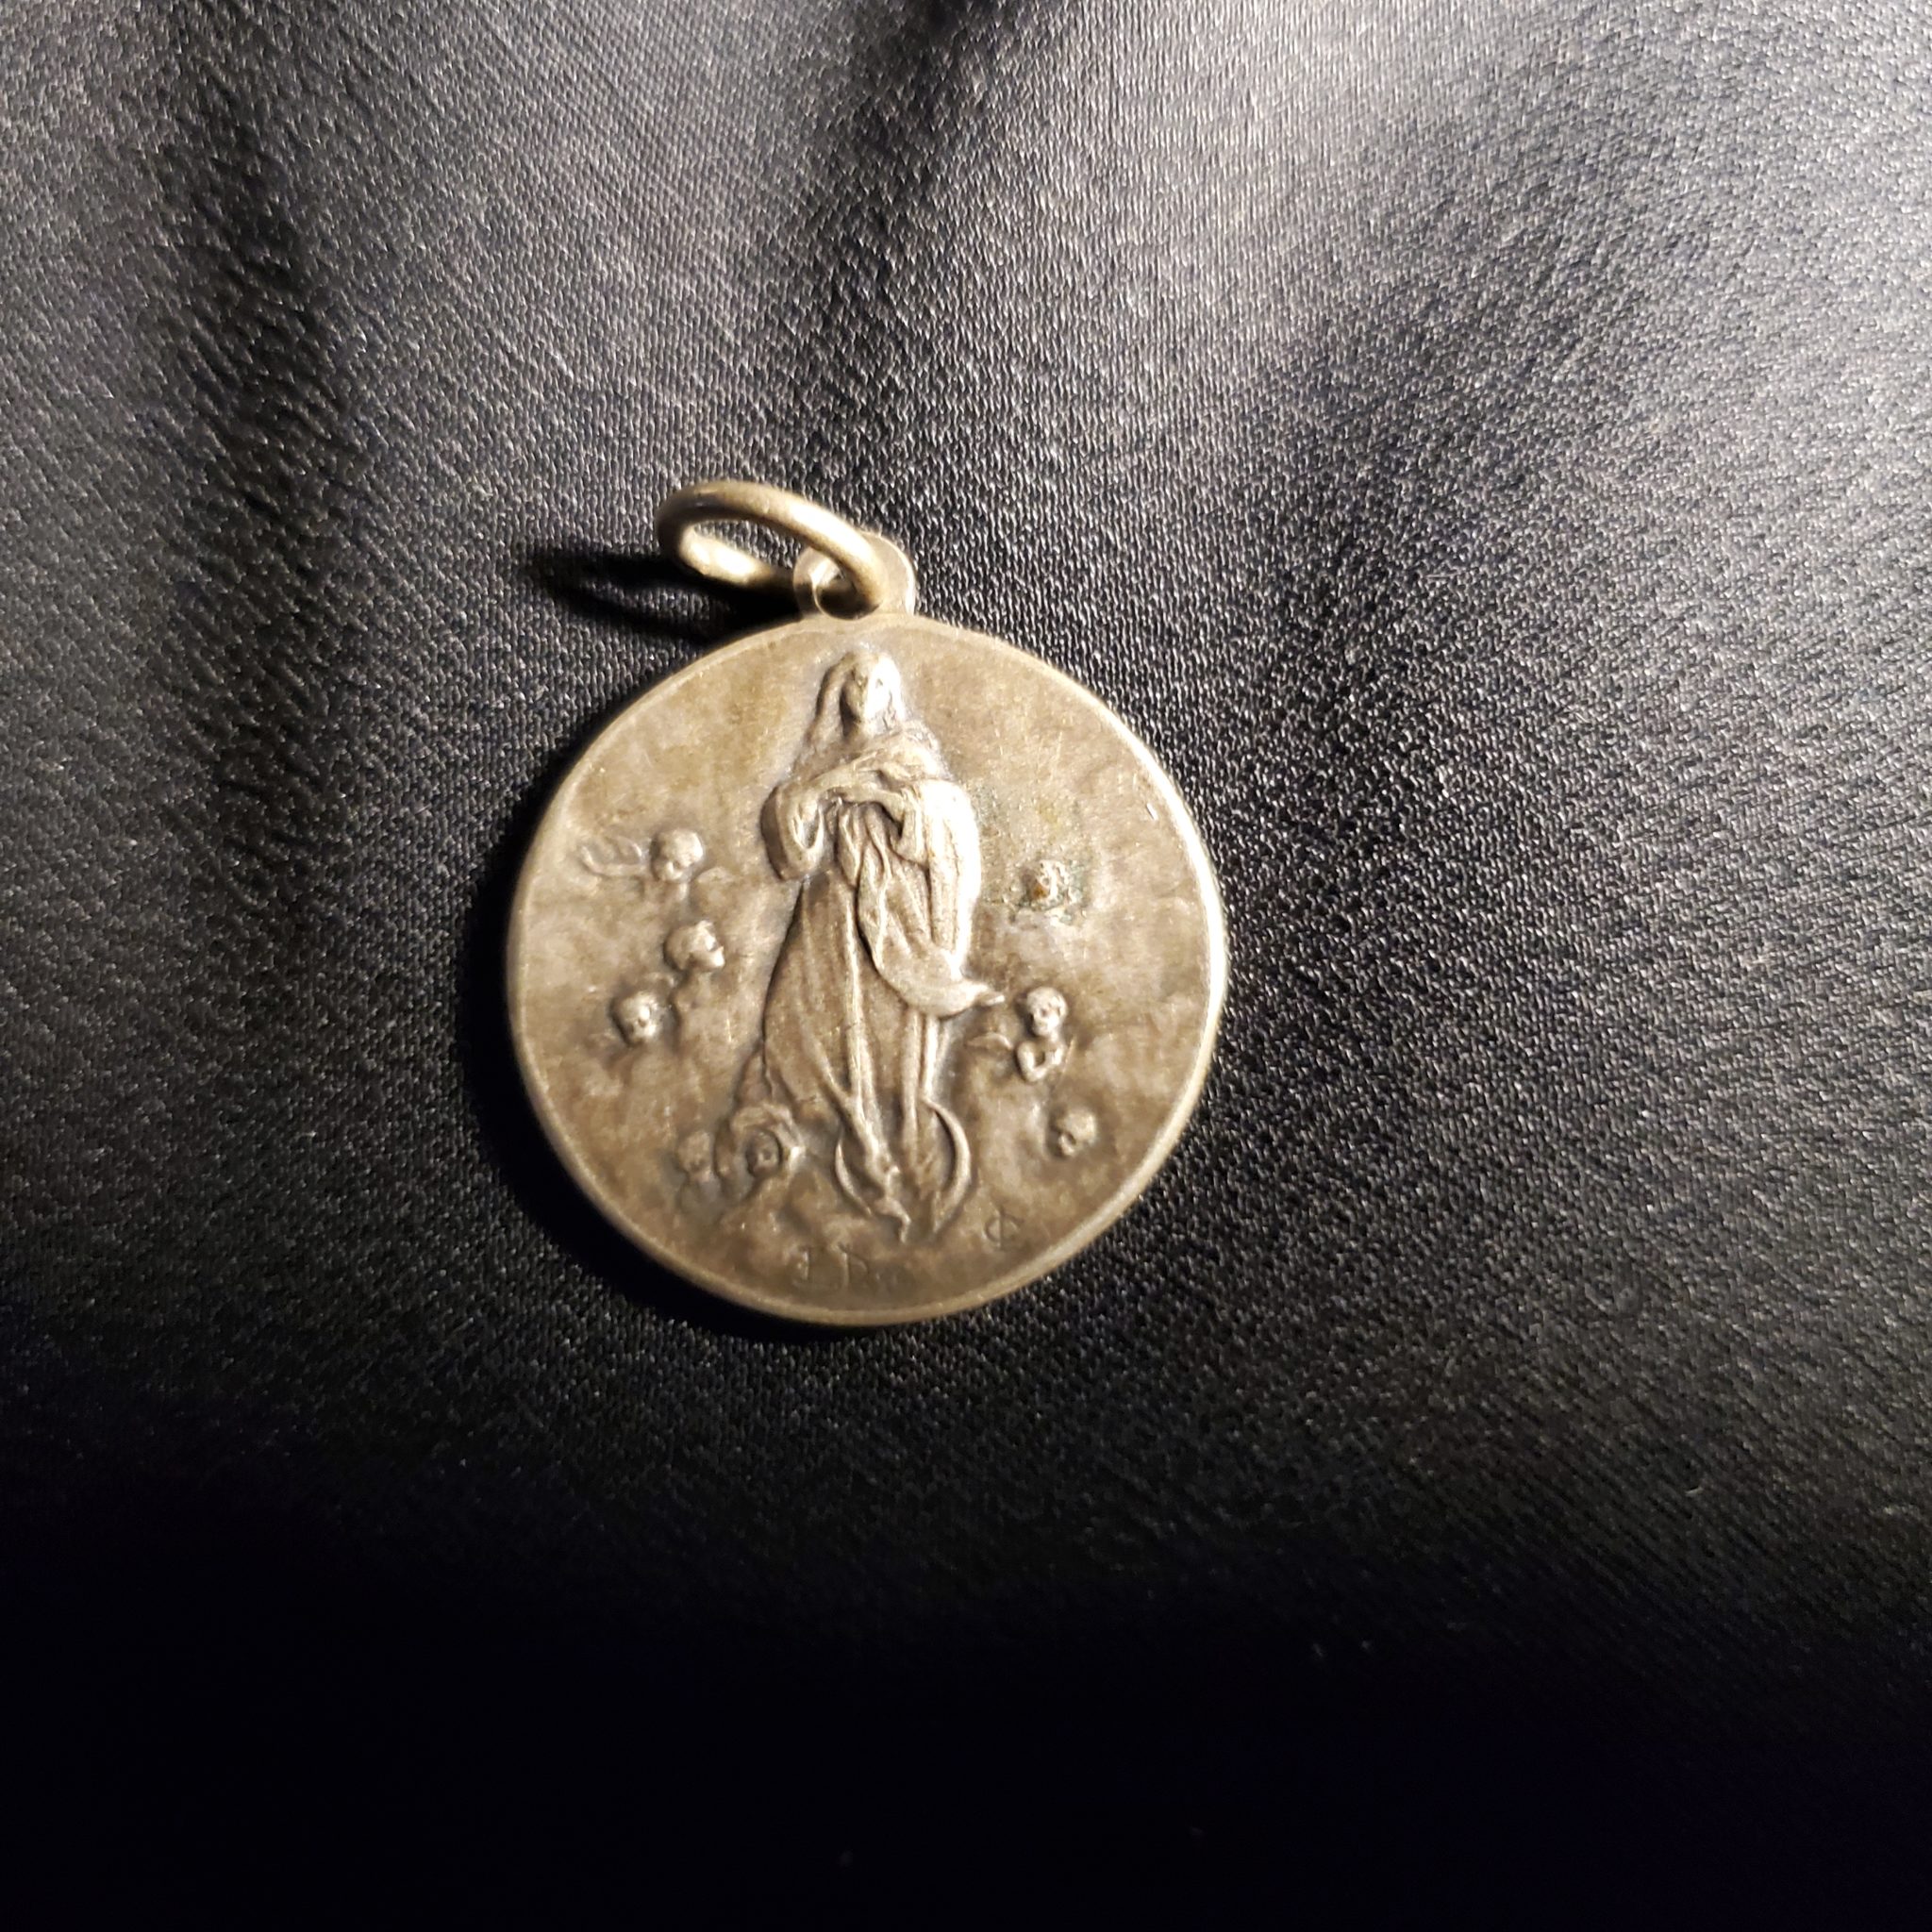 St Benedict Ora et Labora Medal - Patron Against Temptation and Evil -  Sterling Silver Antique Replica - Rosa Mystica Medals